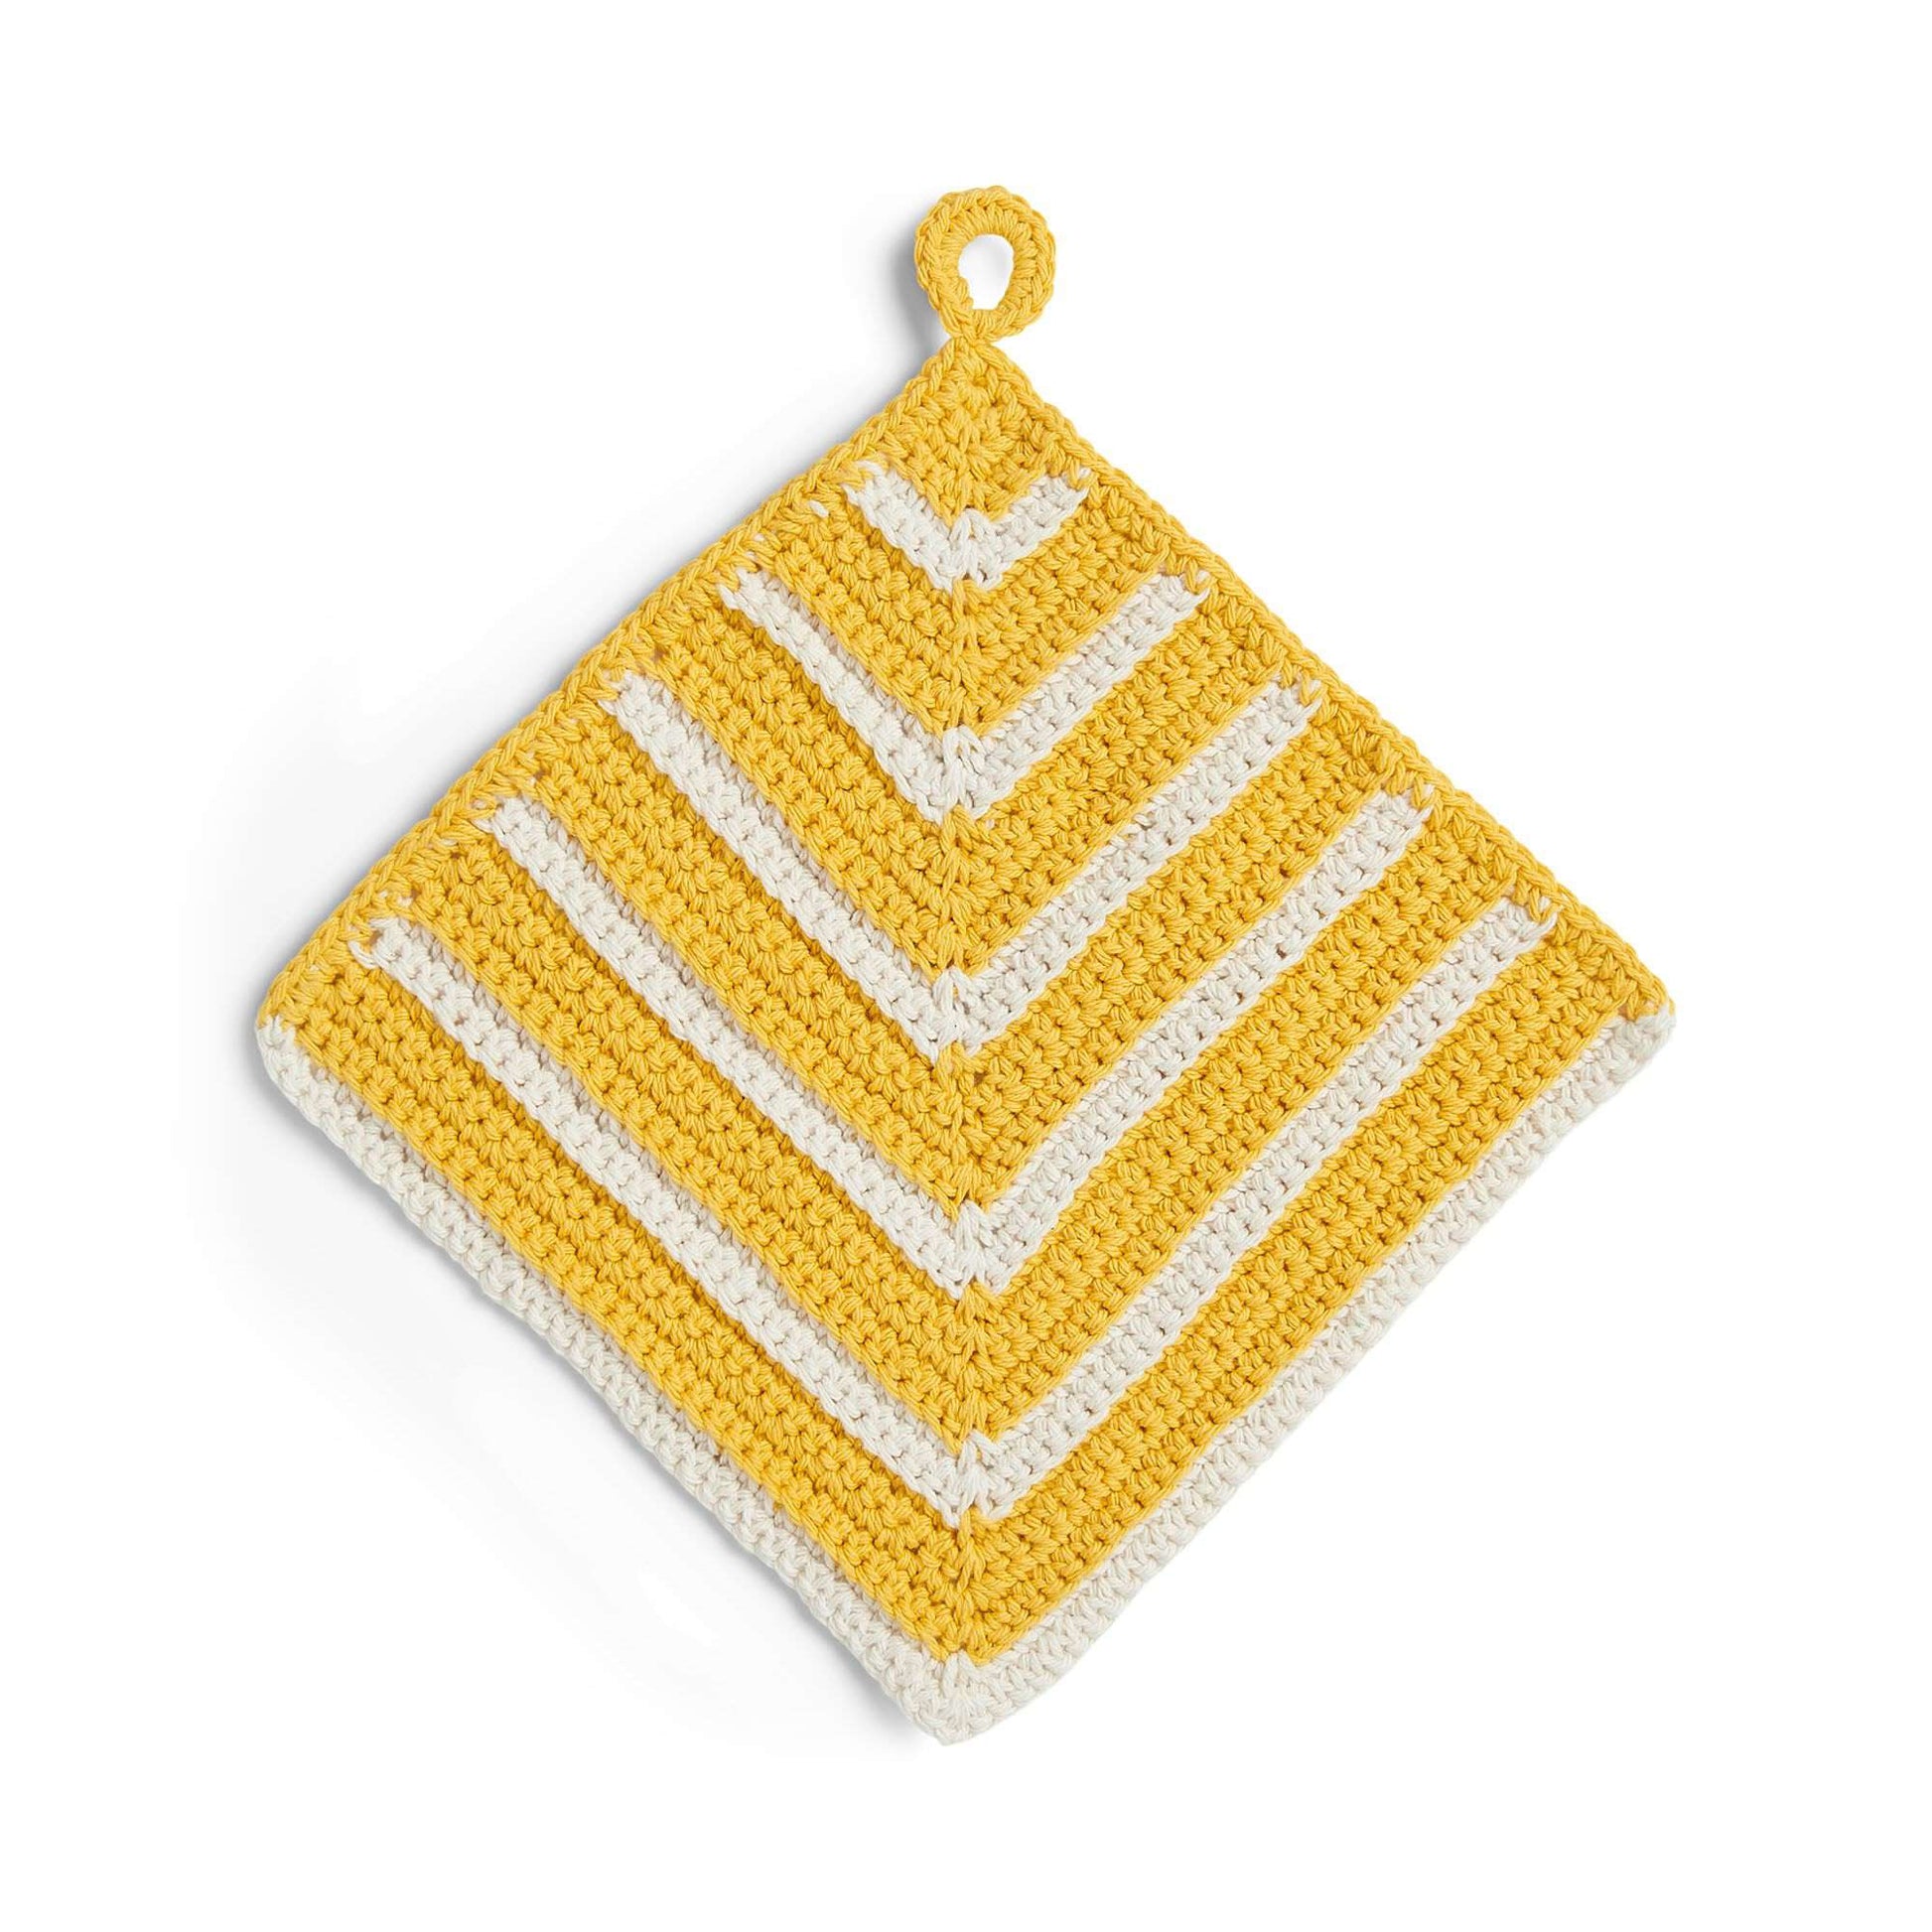 Free Lily Crochet Striped Dishcloth Set Pattern